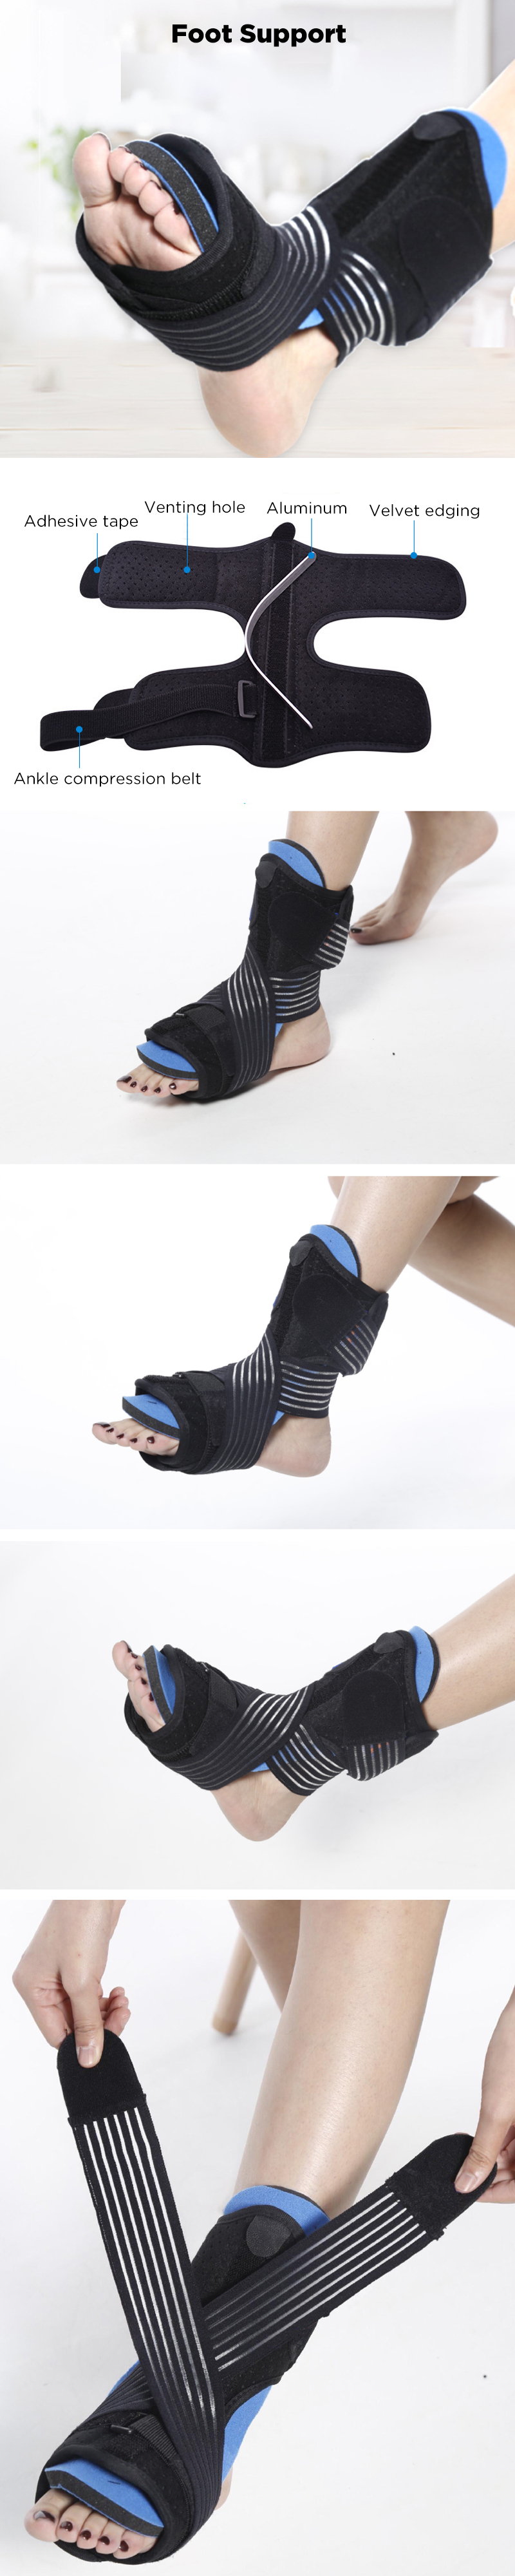 1-Pcs-Foot-Support-Splint-Orthopedic-Elastic-Compression-Sport-Bandage-Fitness-Exercise-Protective-G-1535875-1